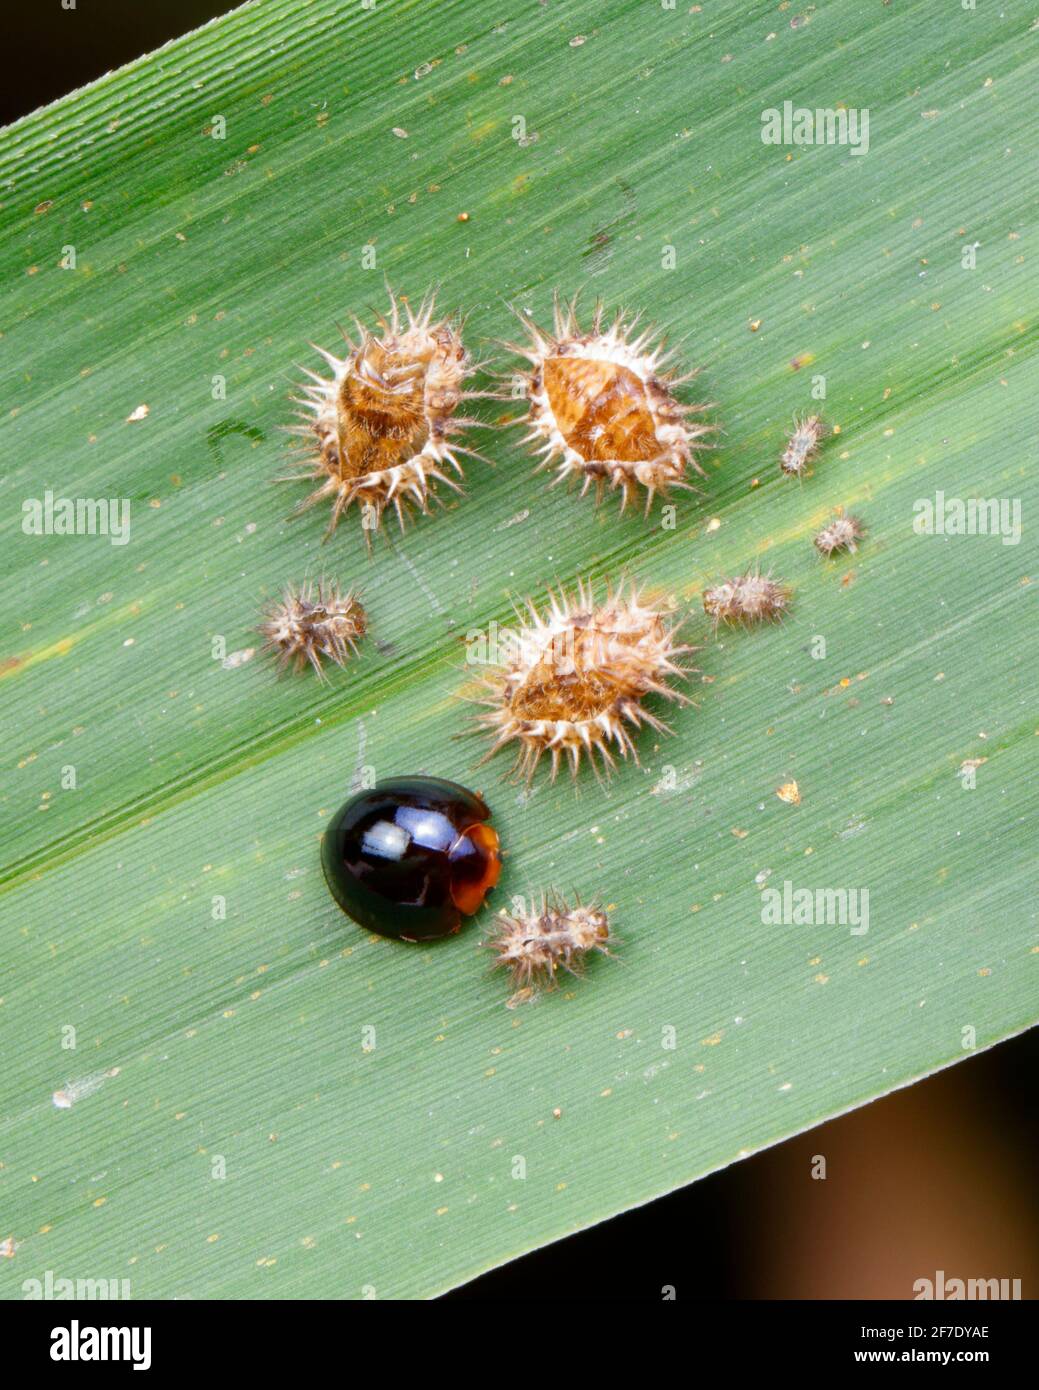 Black ladybird beetle, Chilocorus nigrita, pupae or pupae casings on bamboo leaves. Stock Photo